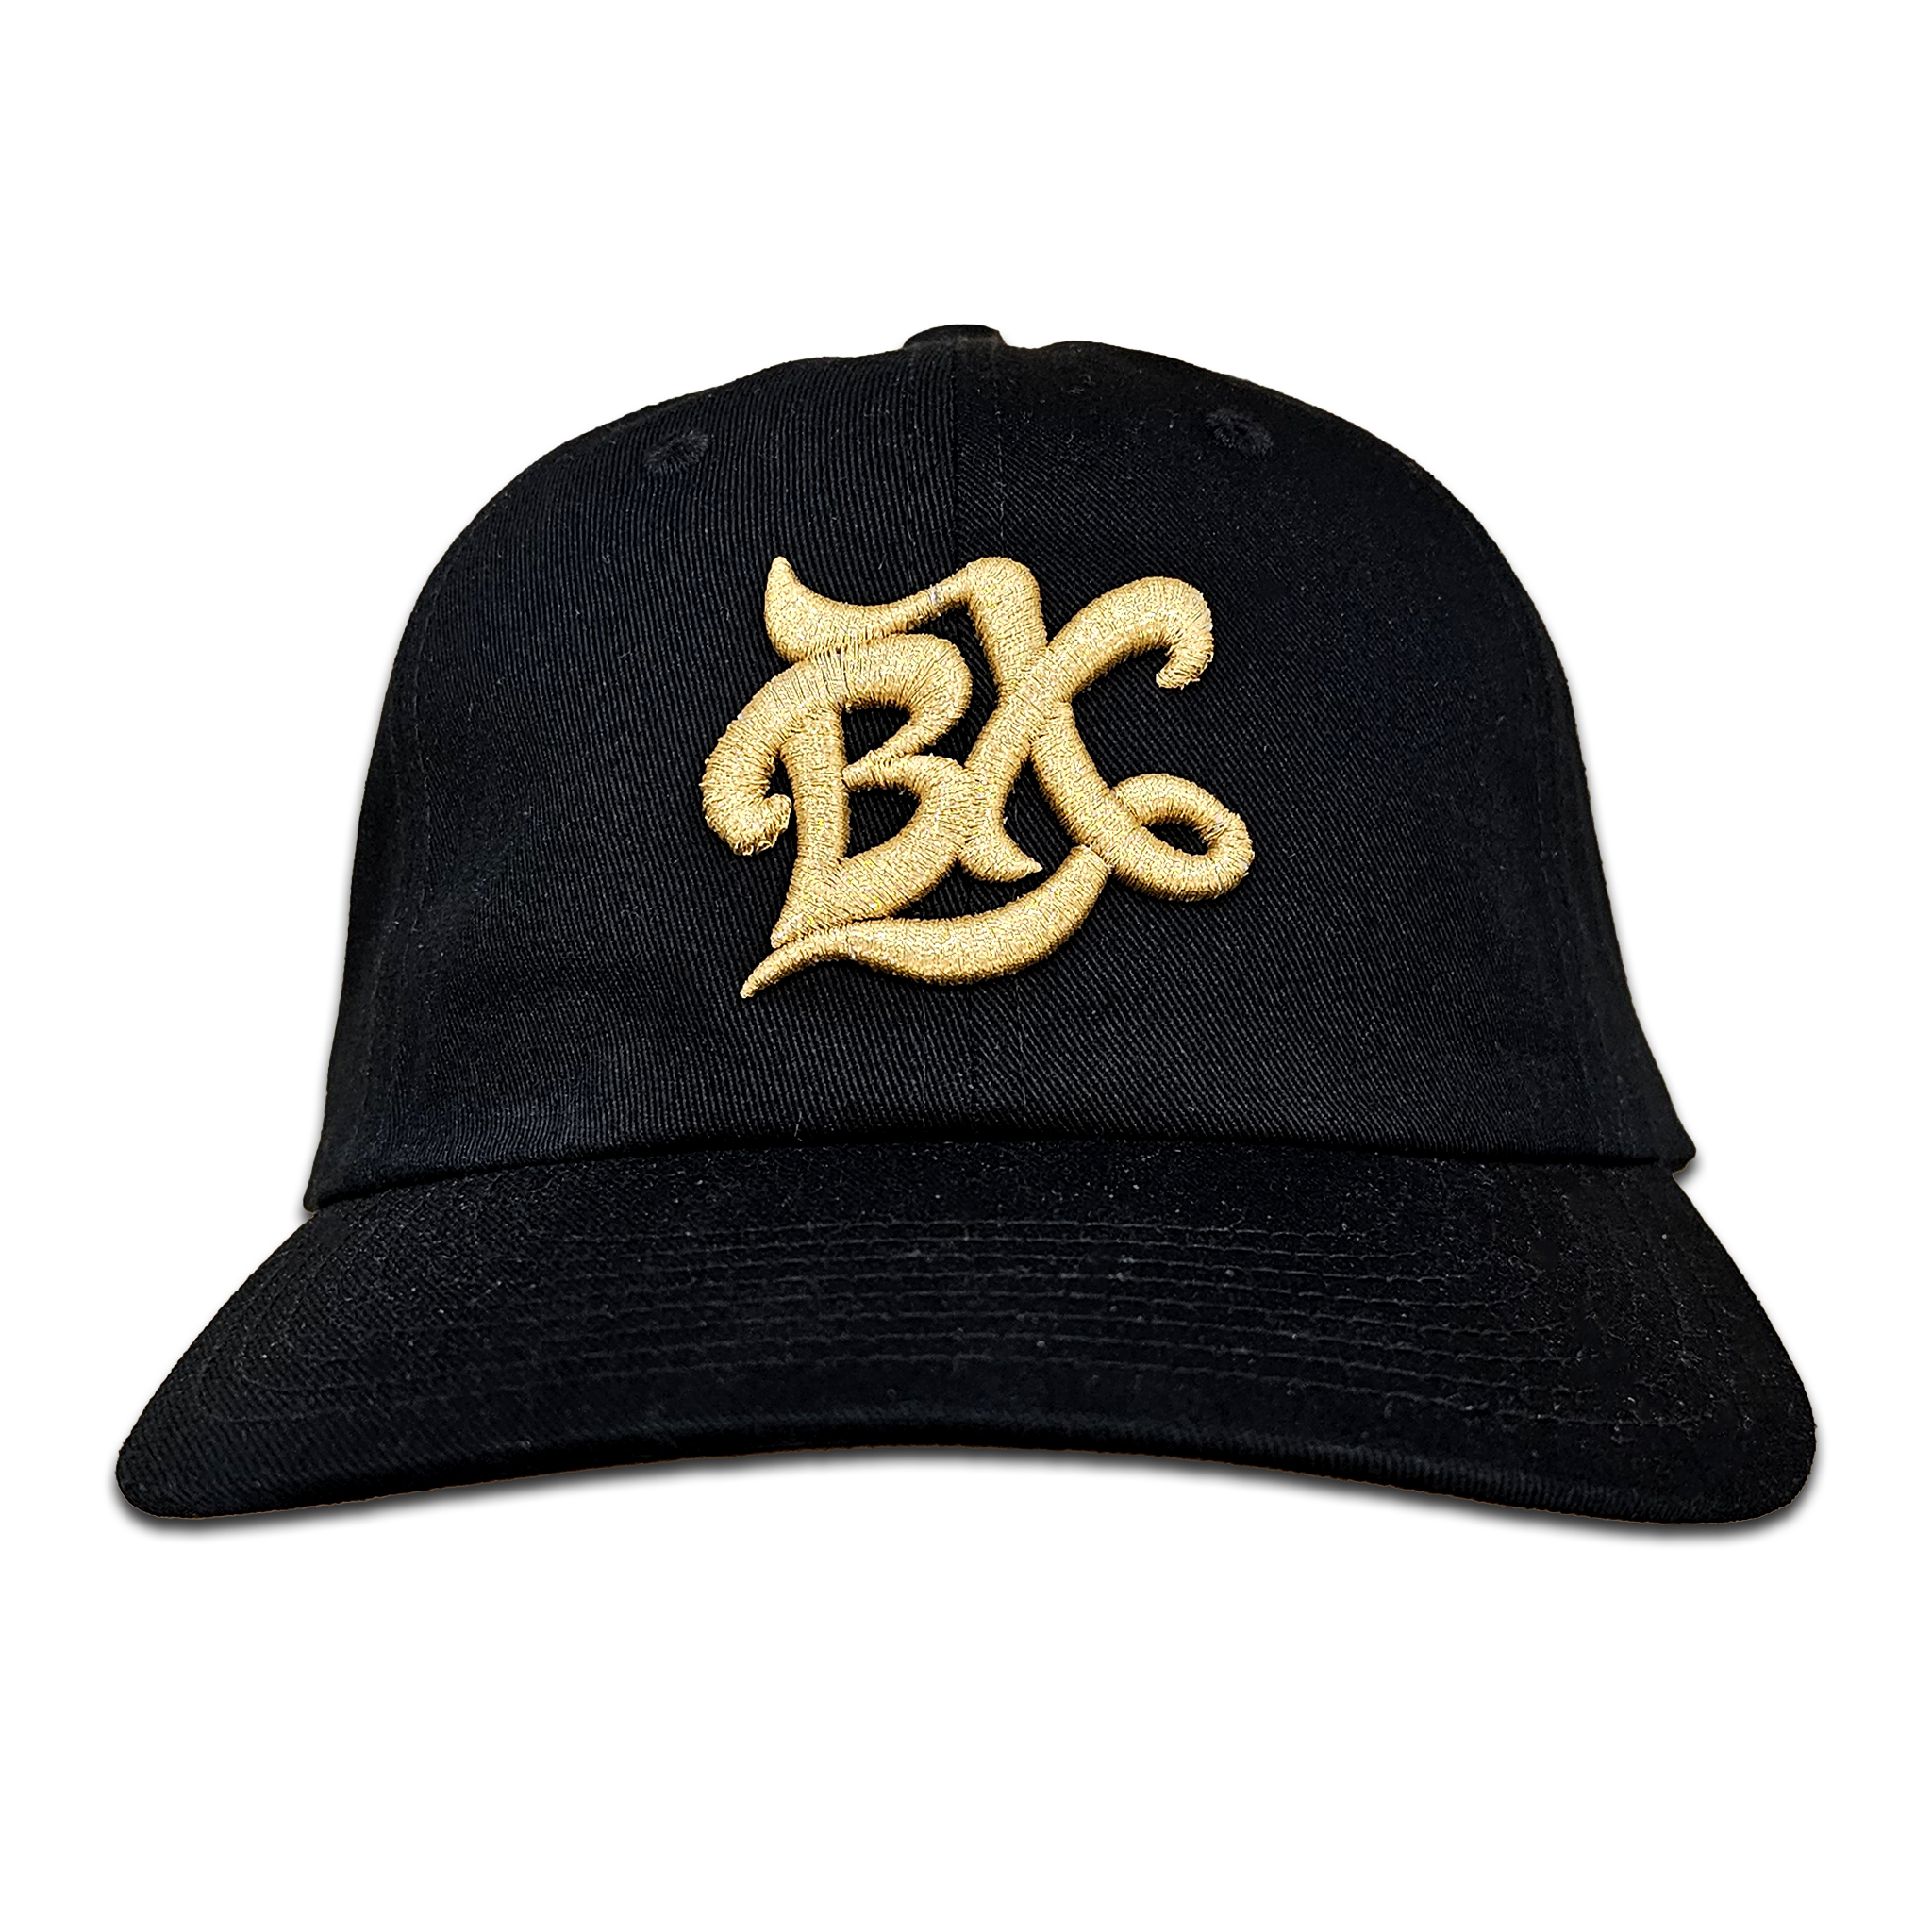 BX Wave Dad Hat in Black/Metallic Gold Front